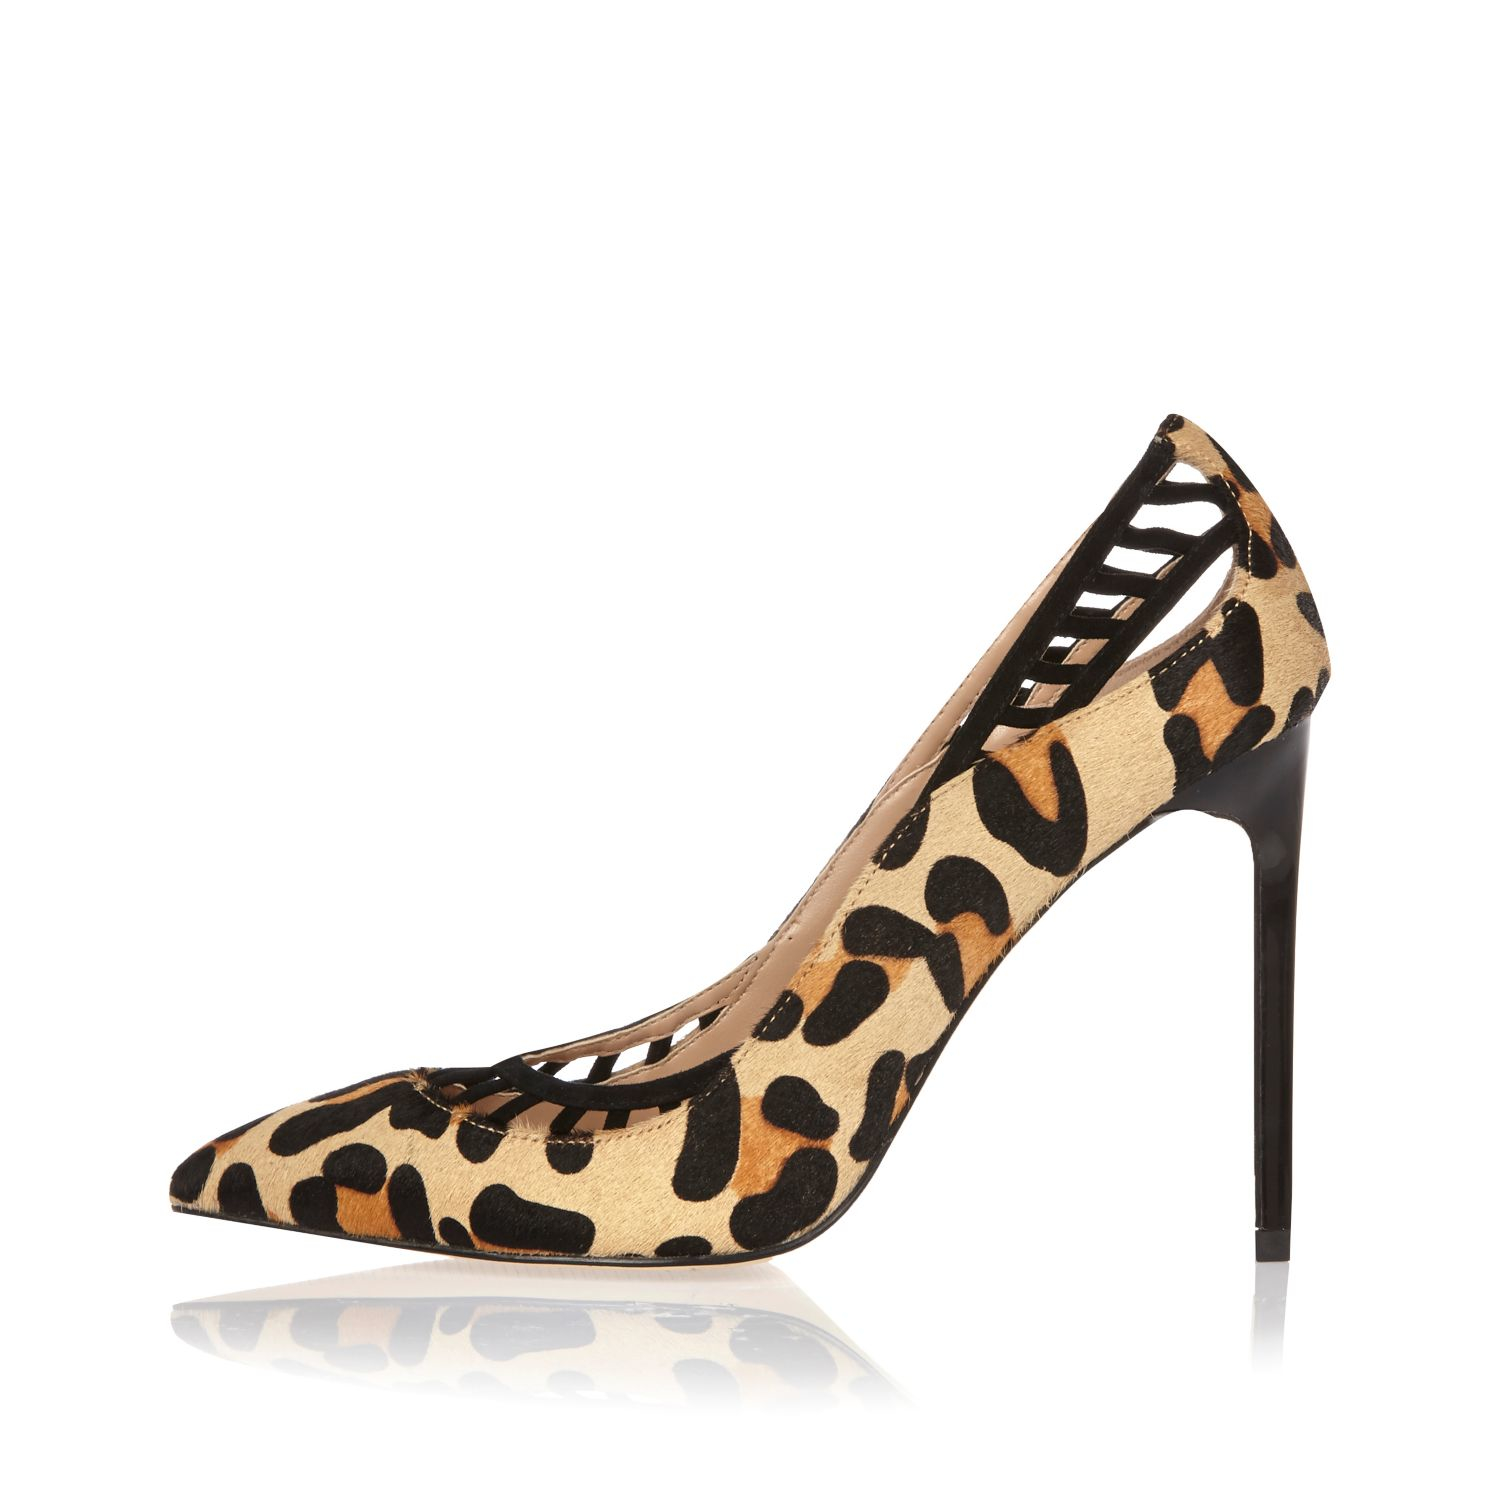 river island leopard print sandals